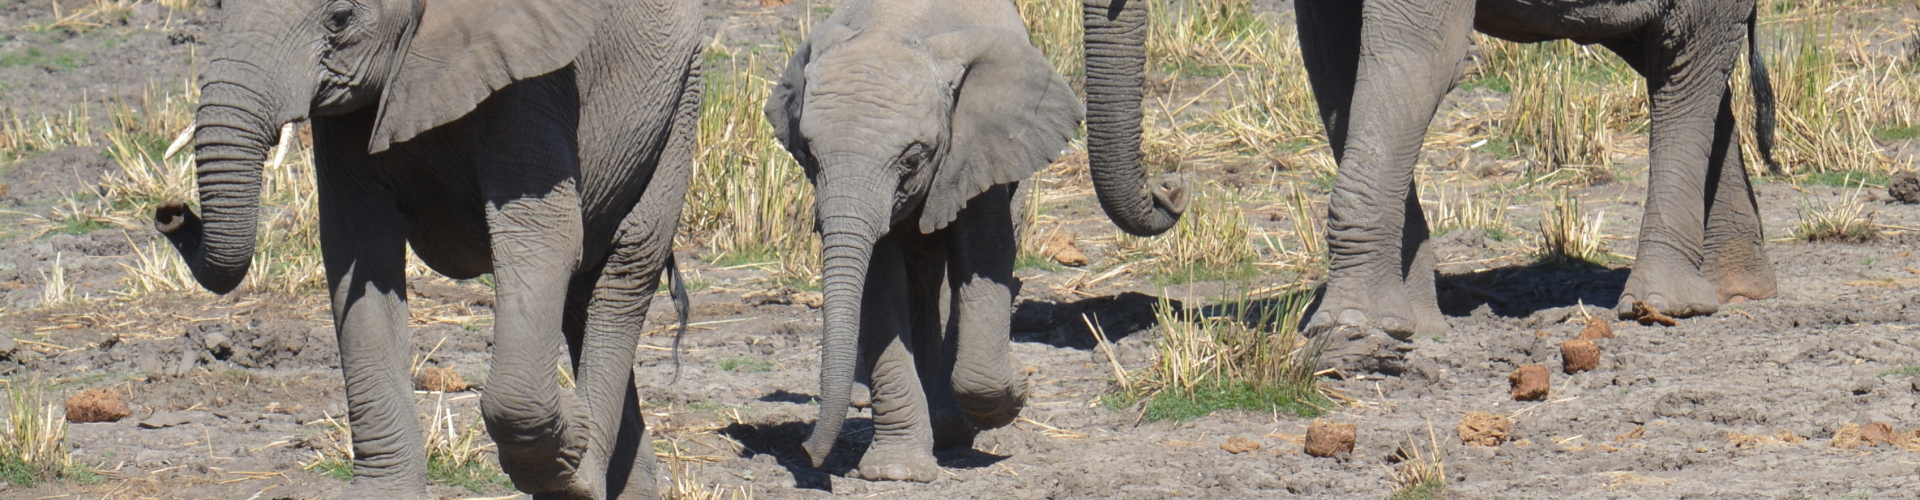 olifanten safari zuid-afrika